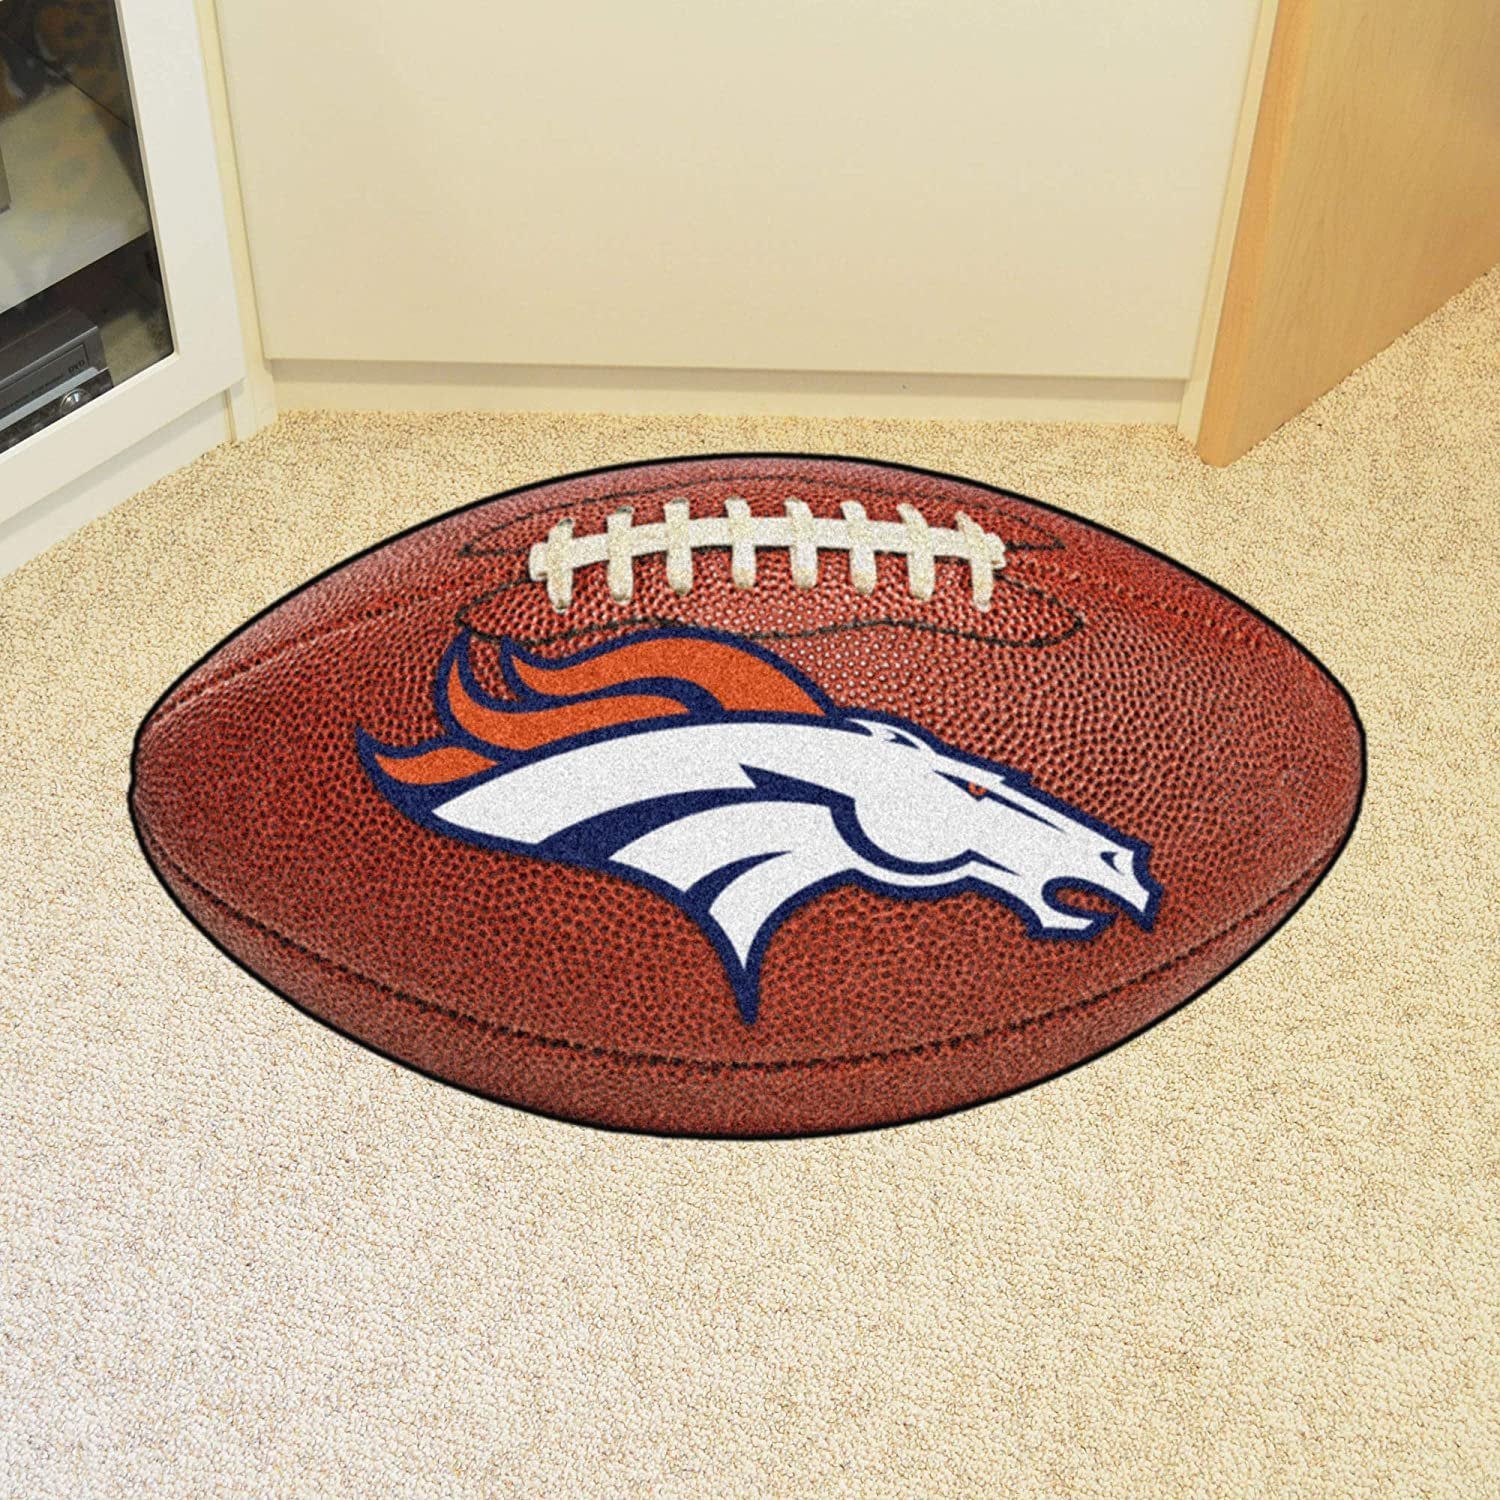 Denver Broncos Floor Mat Area Rug, 20x32 Inch, Non-Skid Backing, Football Design